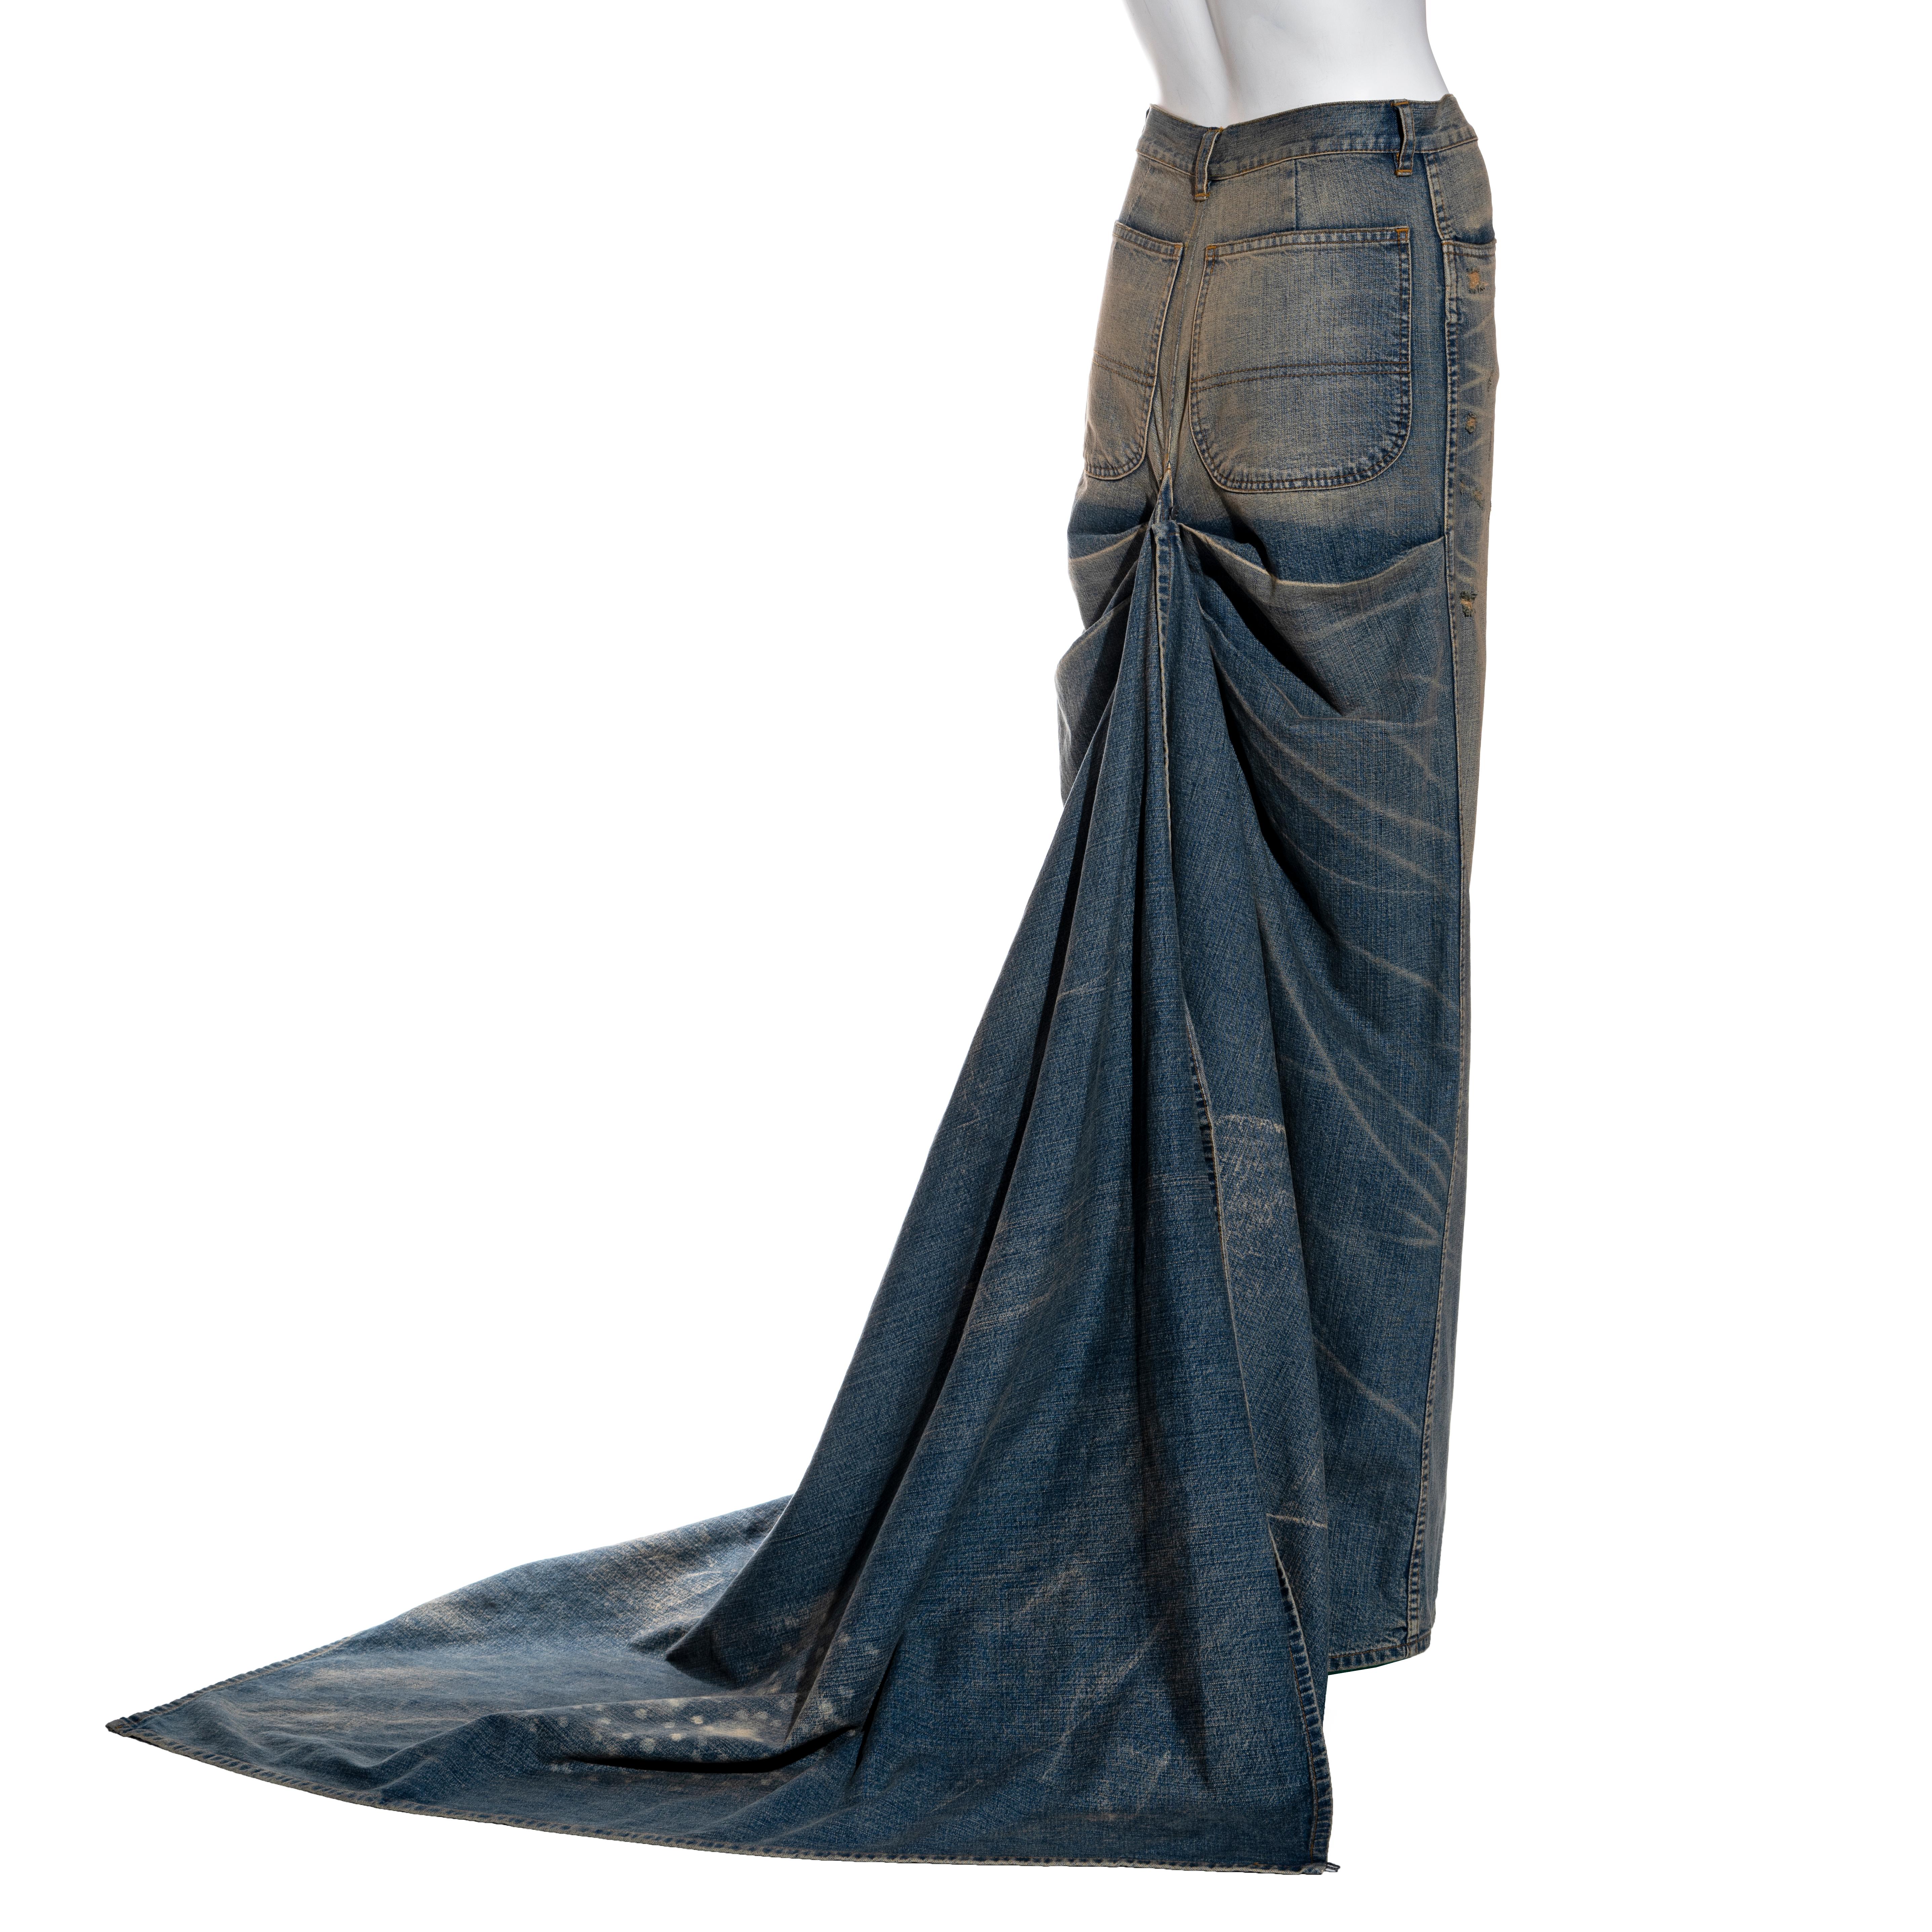 Ralph Lauren distressed denim floor-length bustle skirt with train, ss 2003 1